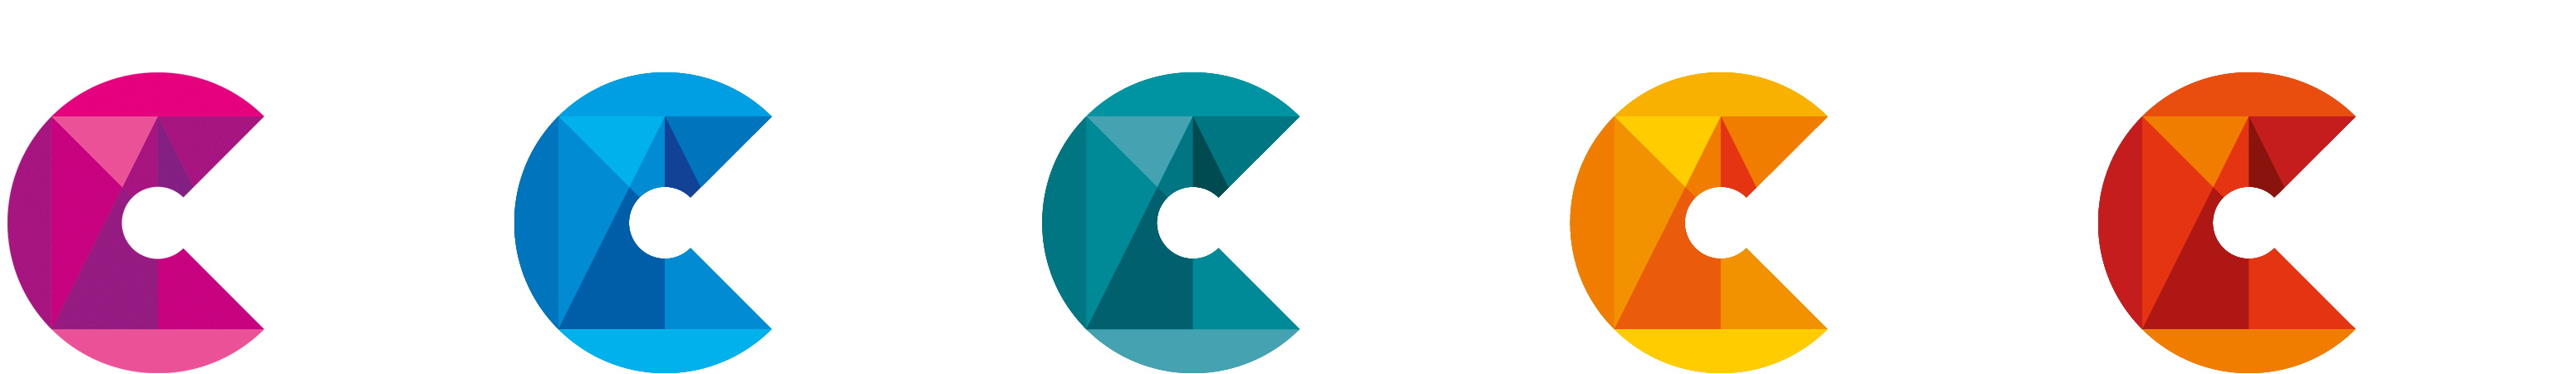 Cantata Trust Groups